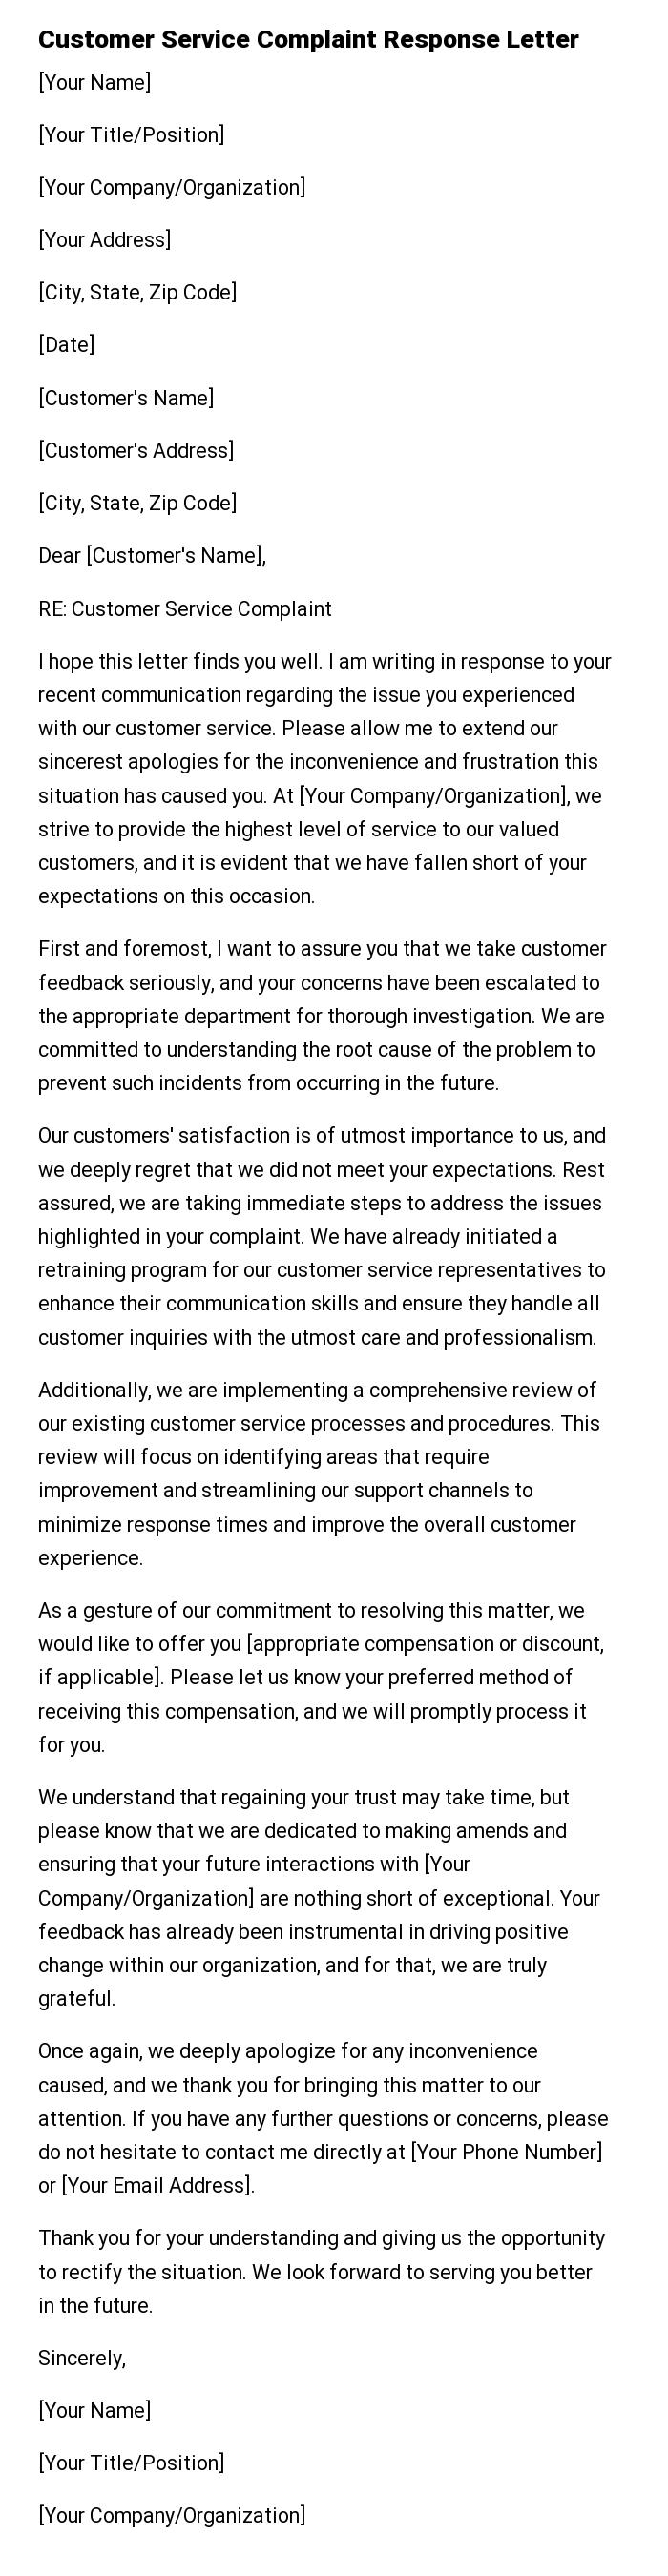 Customer Service Complaint Response Letter